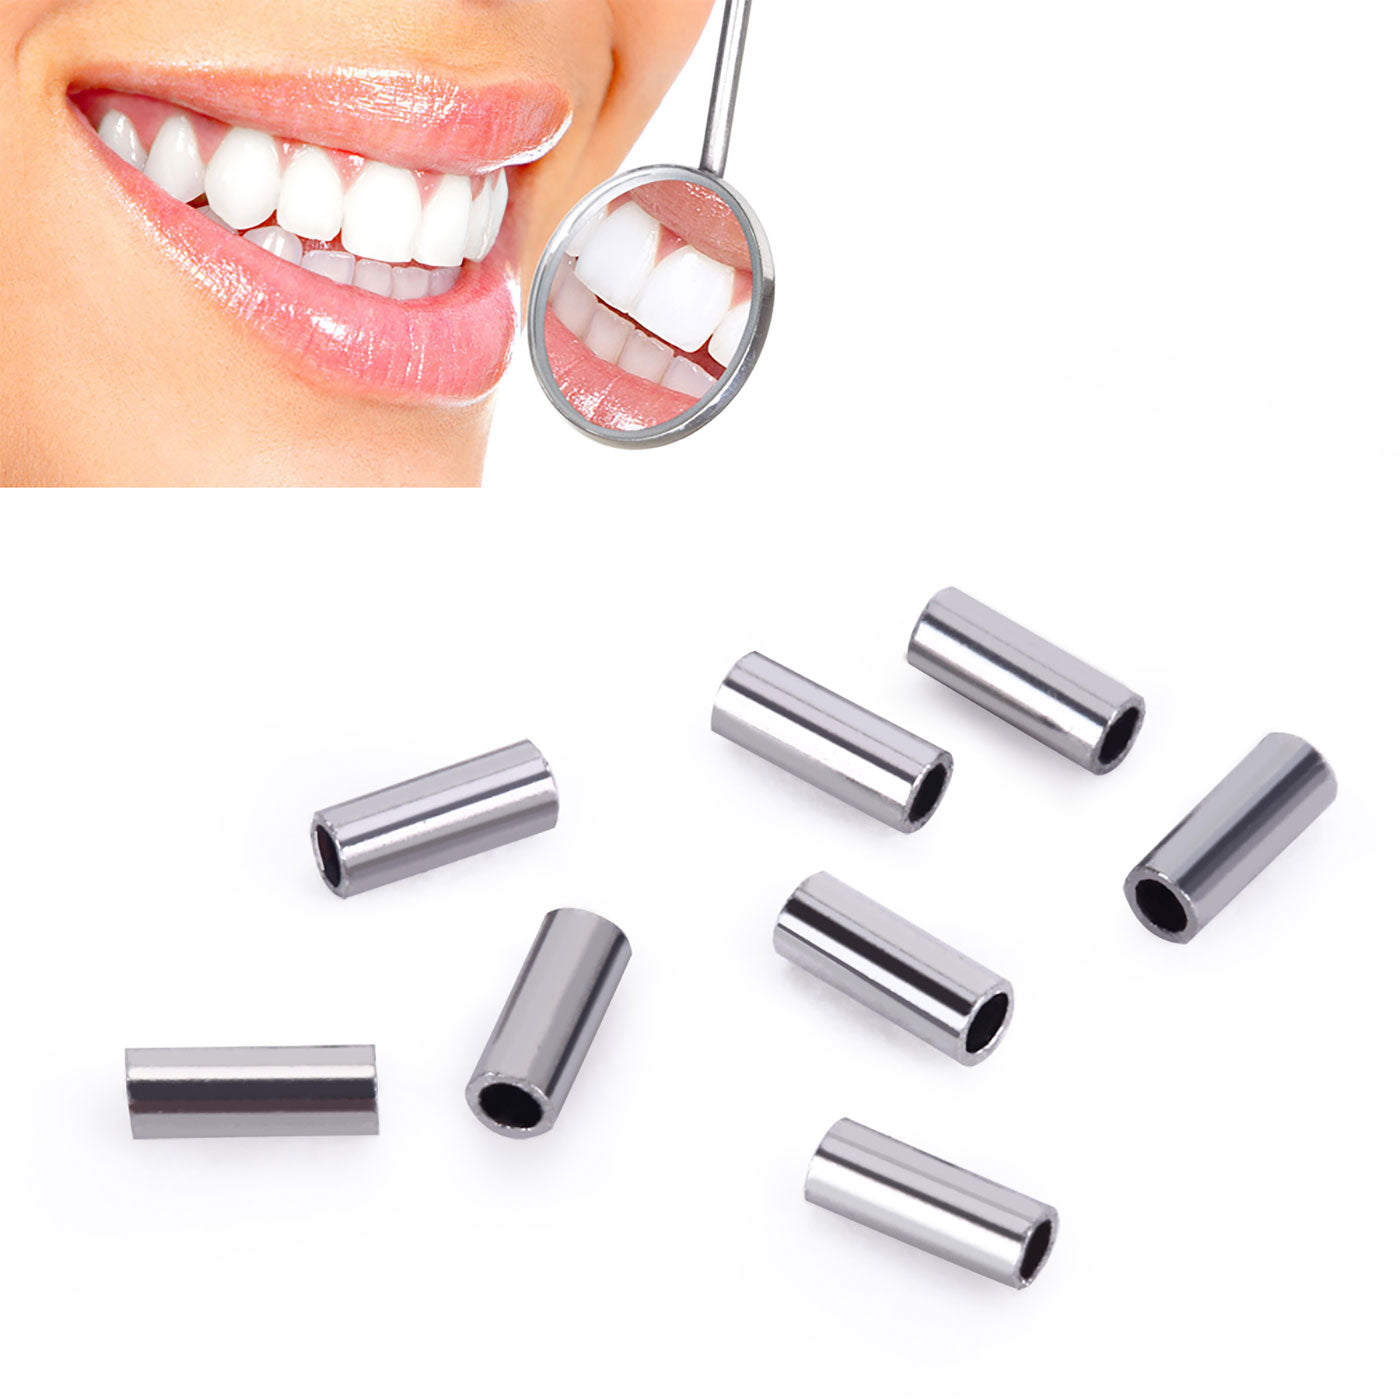 AZDENT Dental Crimpable Hooks Crimpable Mini Stops 0.5mm/0.8mm 10pcs/Bag - azdentall.com